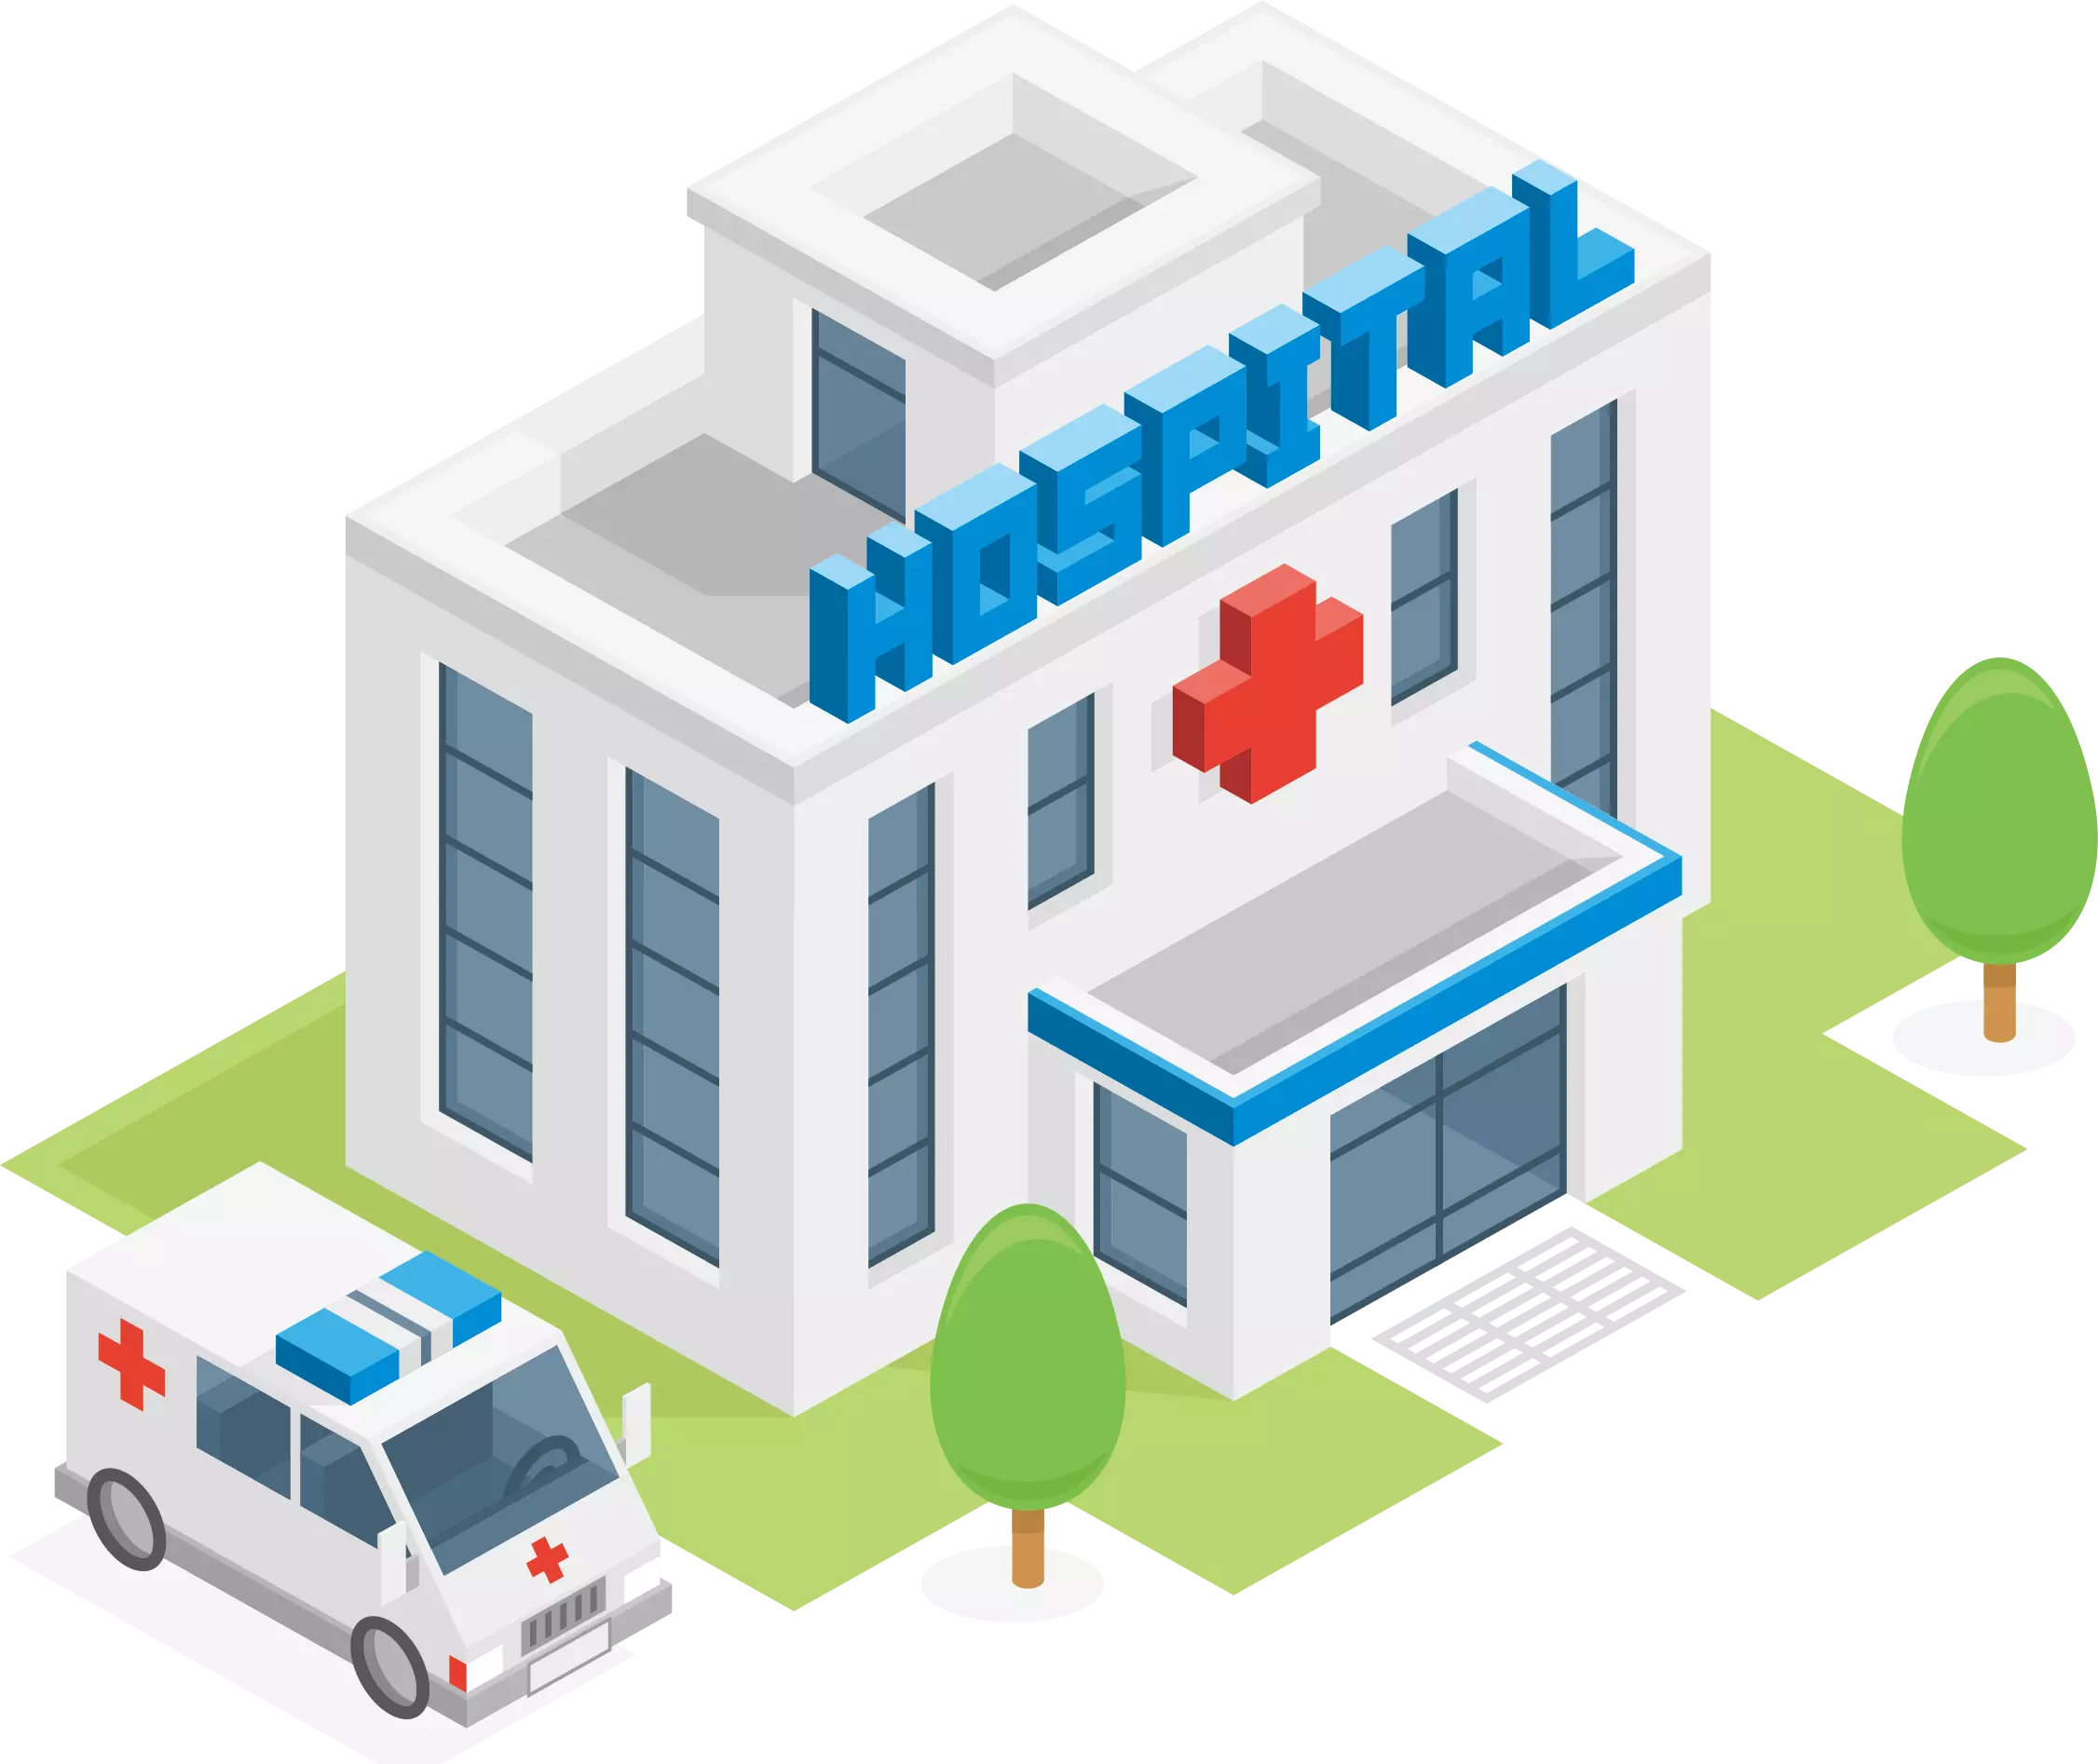 kisspng-hospital-clip-art-ambulance-png-element-5aa0c913ddd371.1510111115204866759086